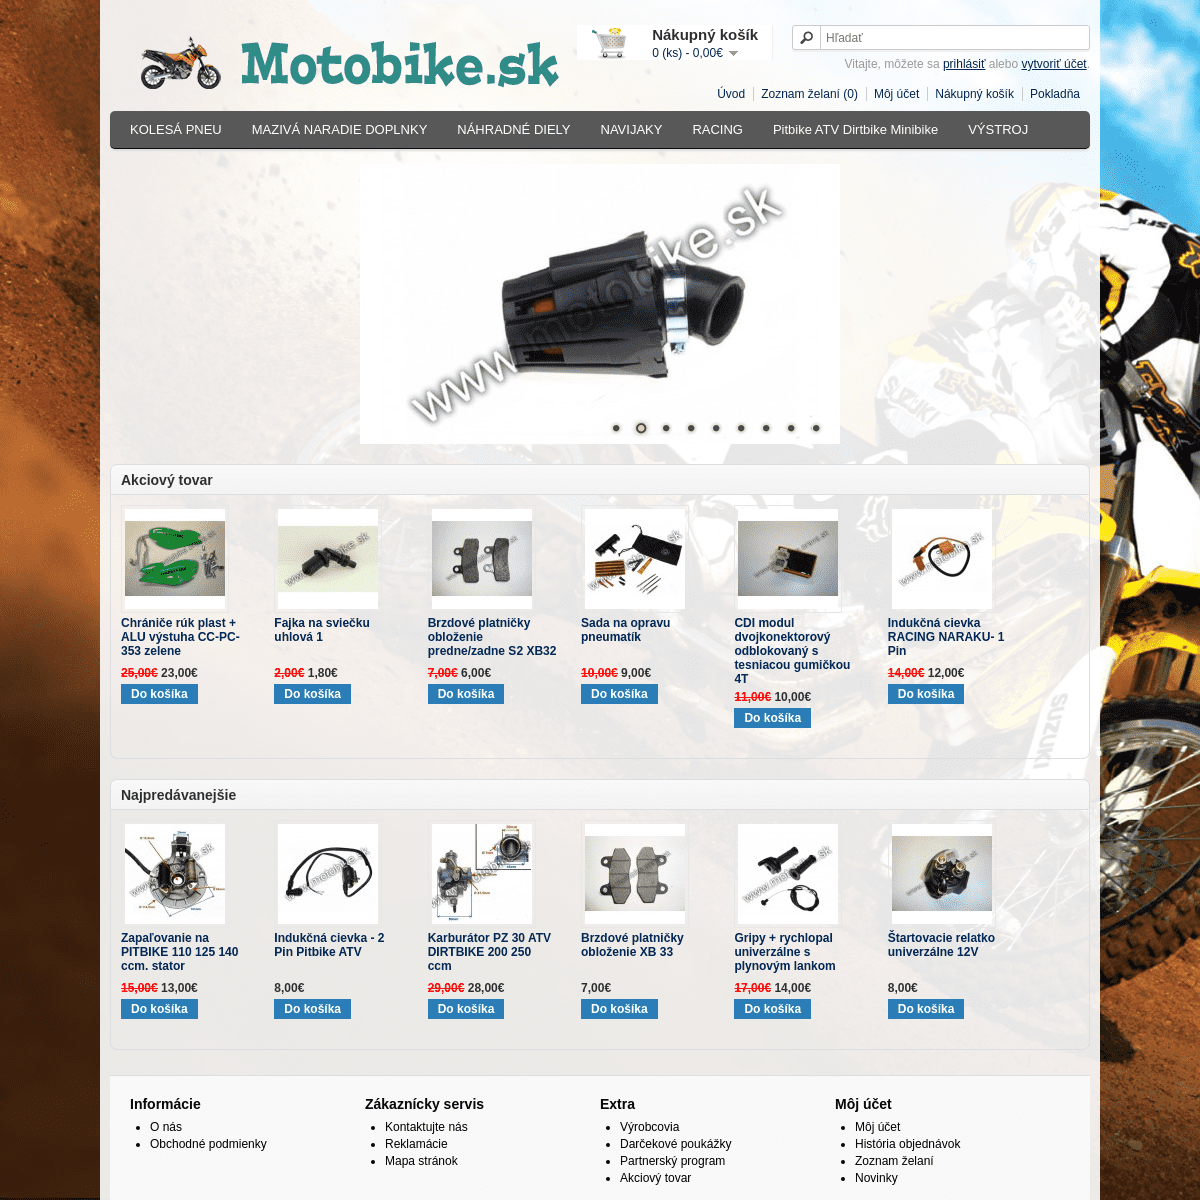 A complete backup of motobike.sk